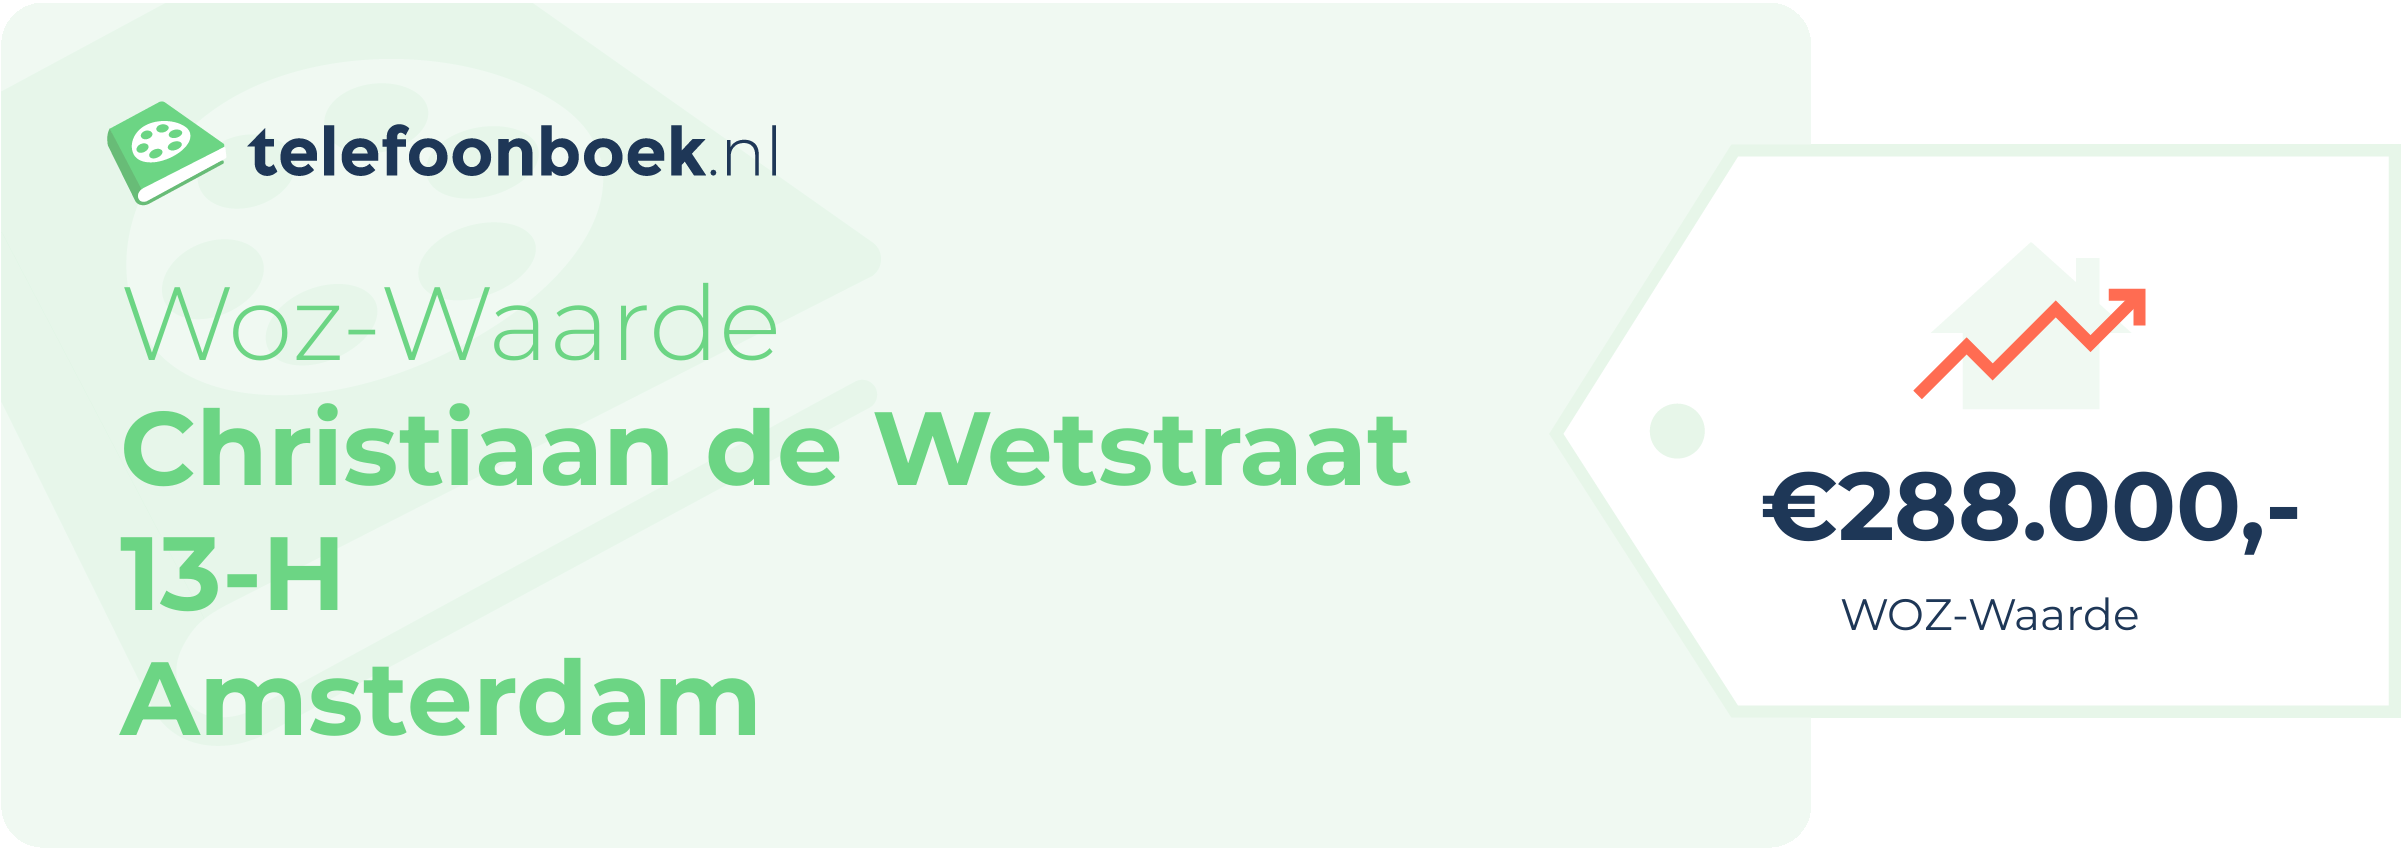 WOZ-waarde Christiaan De Wetstraat 13-H Amsterdam